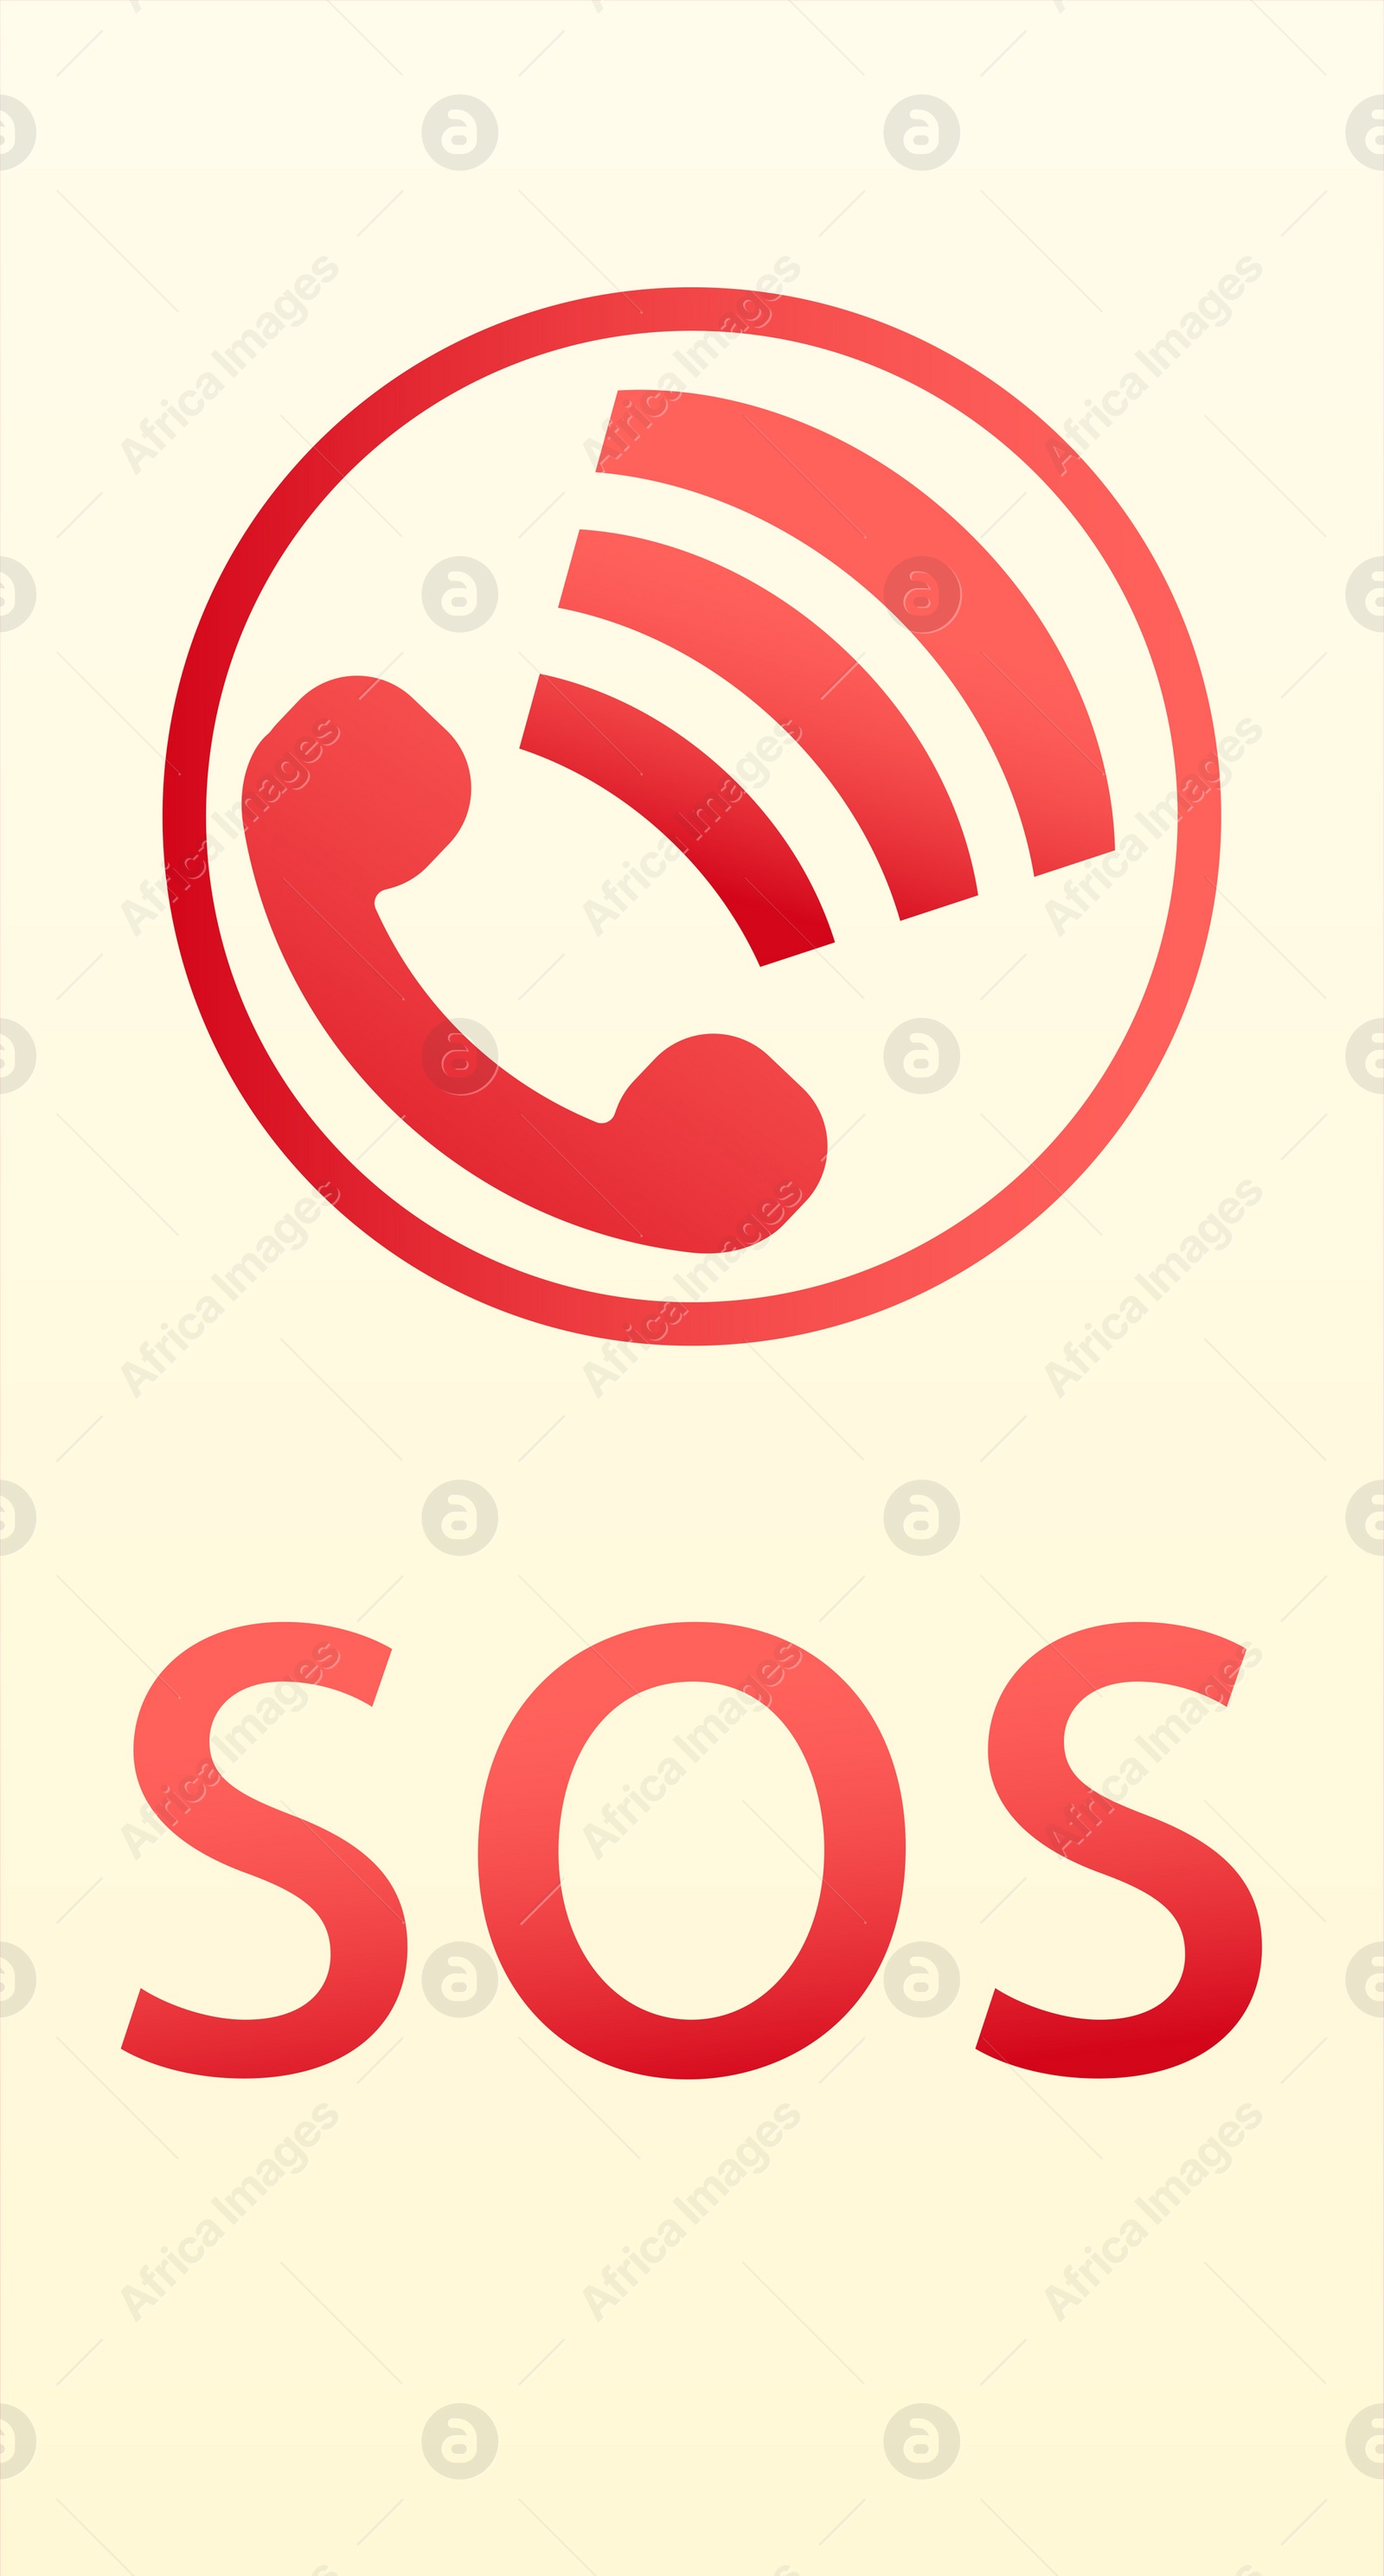 Illustration of Emergency call SOS on smartphone screen, illustration